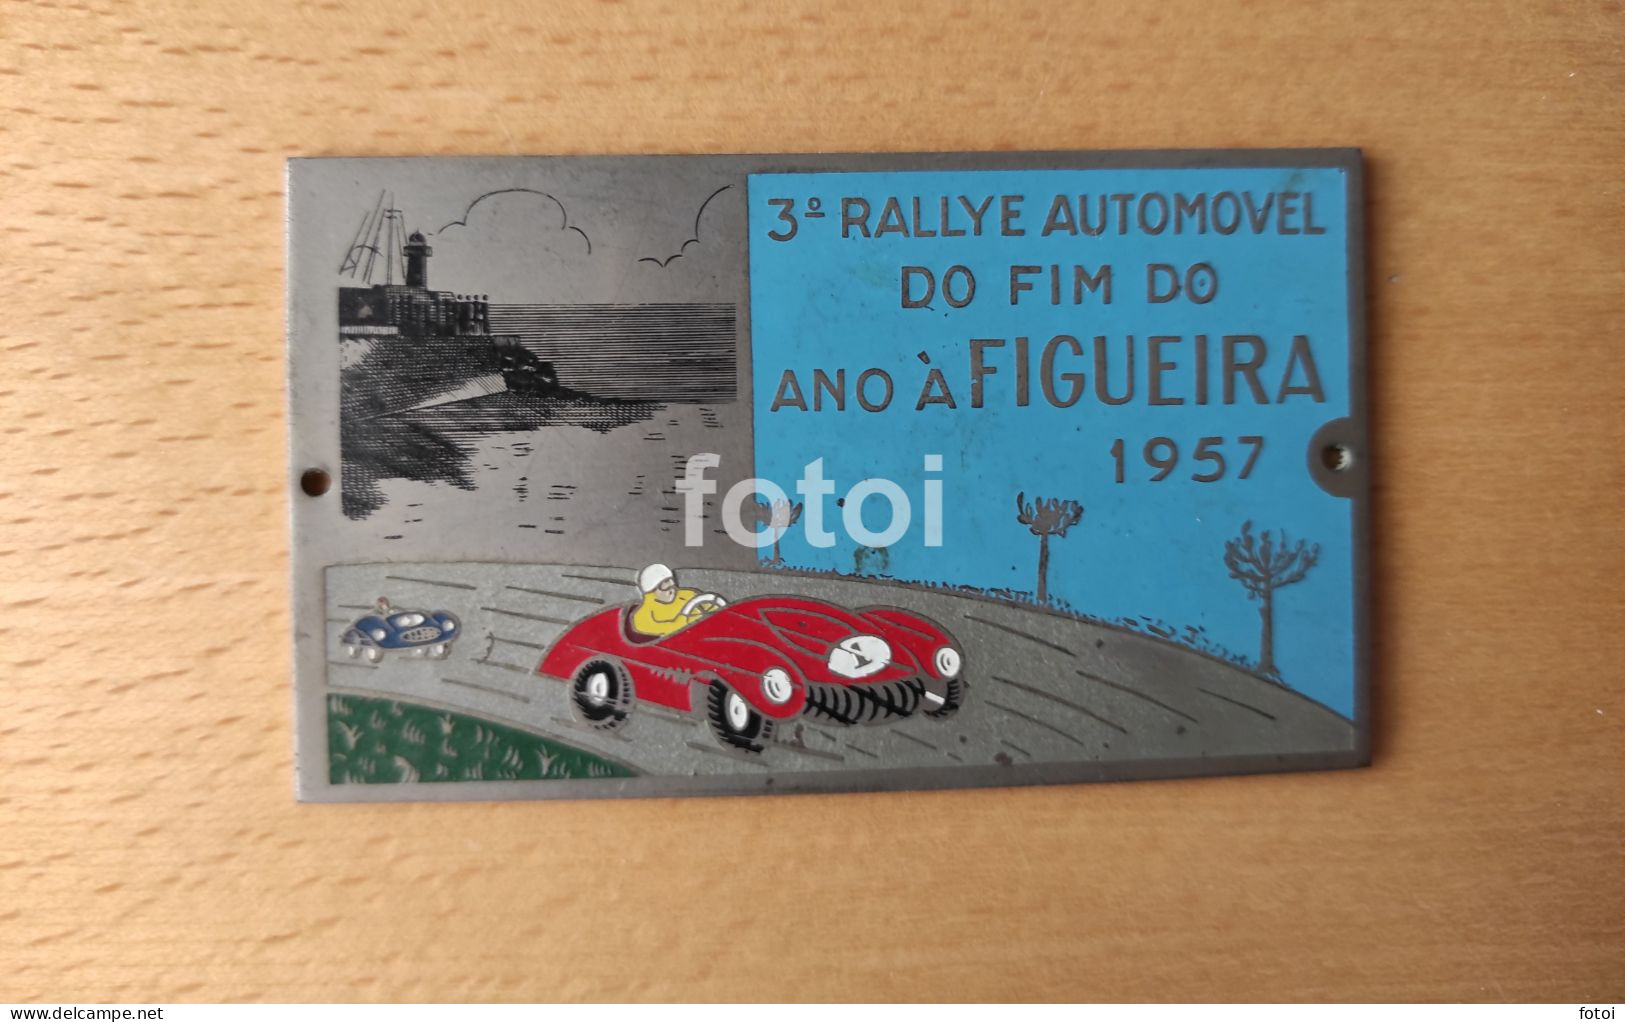 1957 III RALLYE RALLY RALI CAR RACING FIGUEIRA DA FOZ COIMBRA PORTUGAL PLACA ENAMEL BADGE MEDAL - Rallye